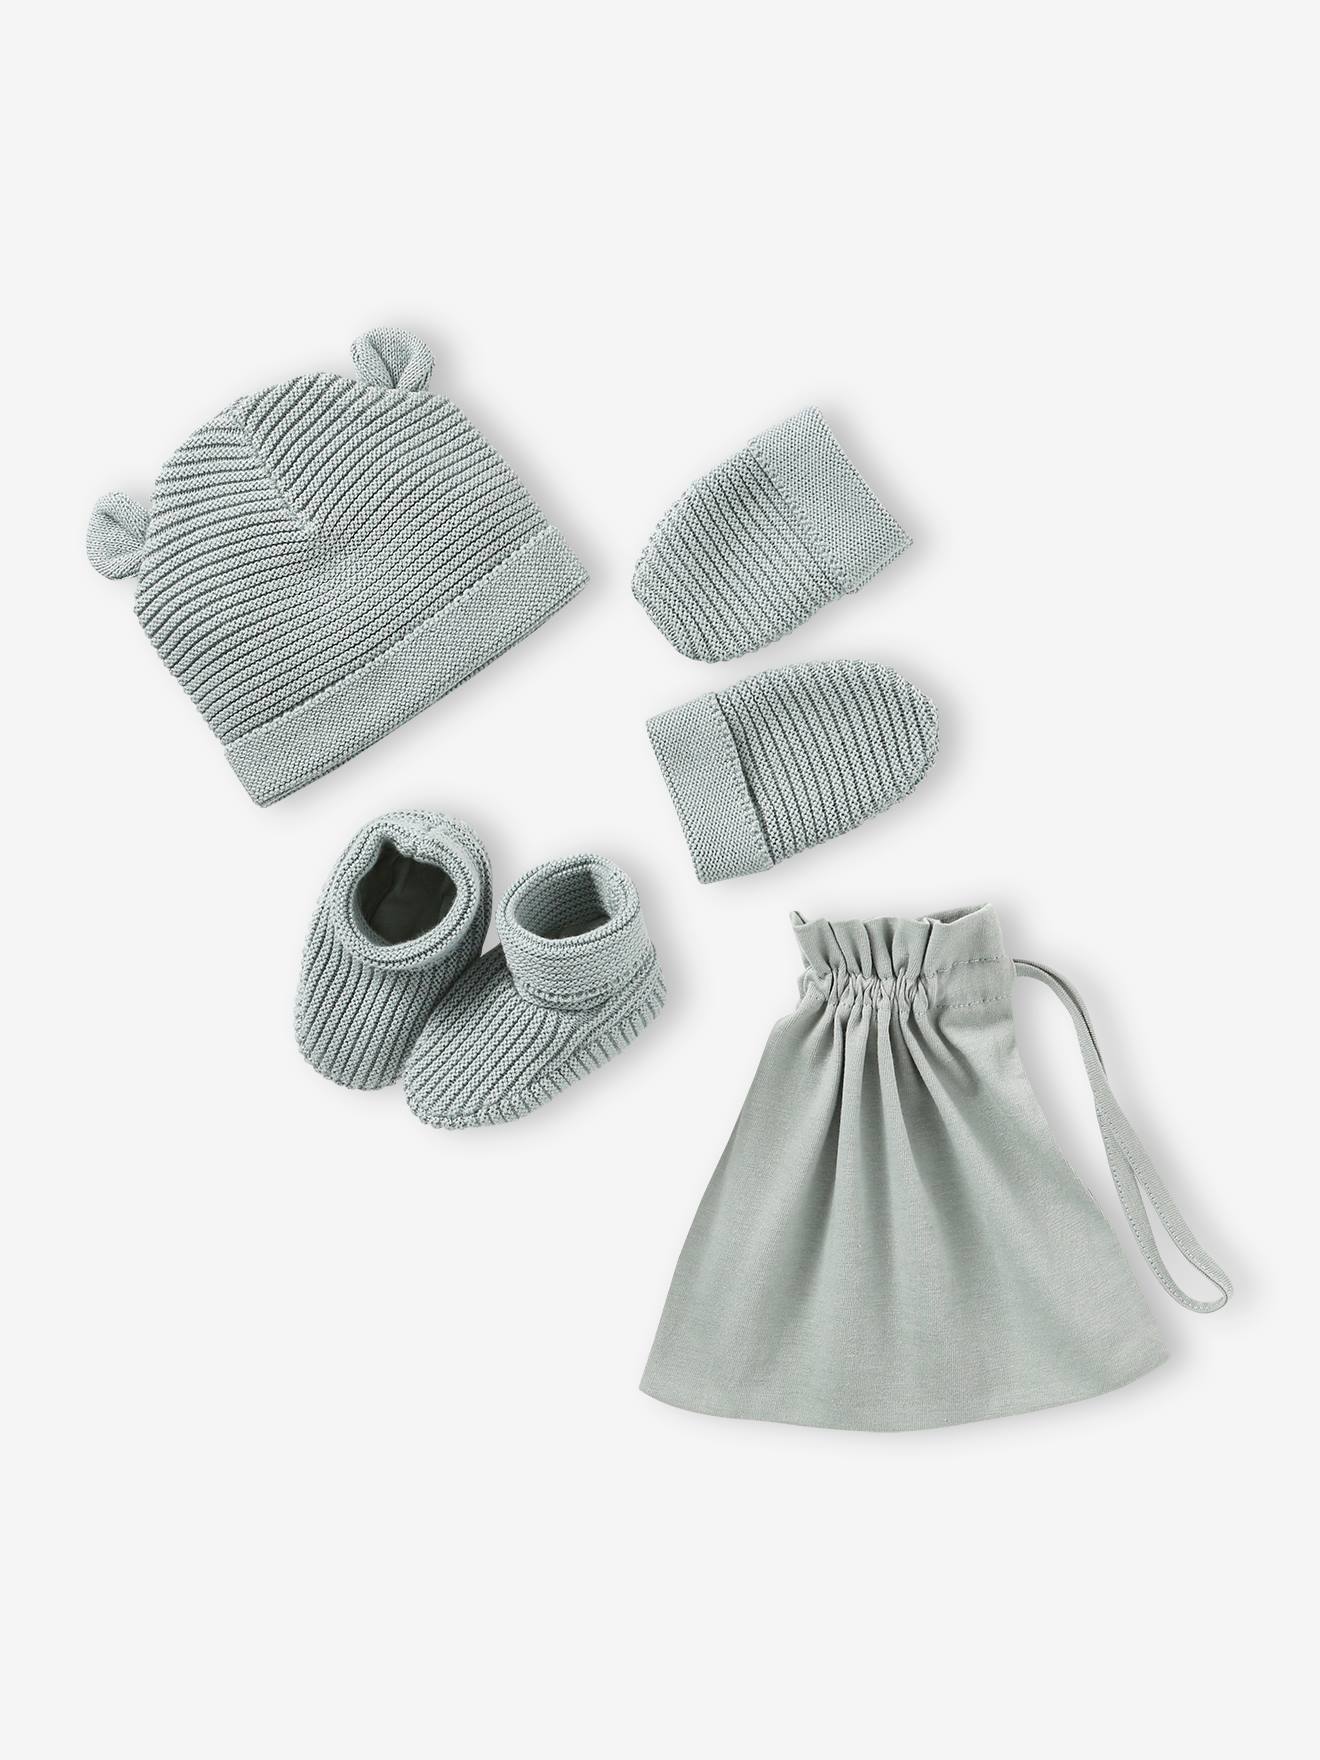 Beanie, Mittens & Booties Set, Matching Pouch, for Newborn Babies grey blue